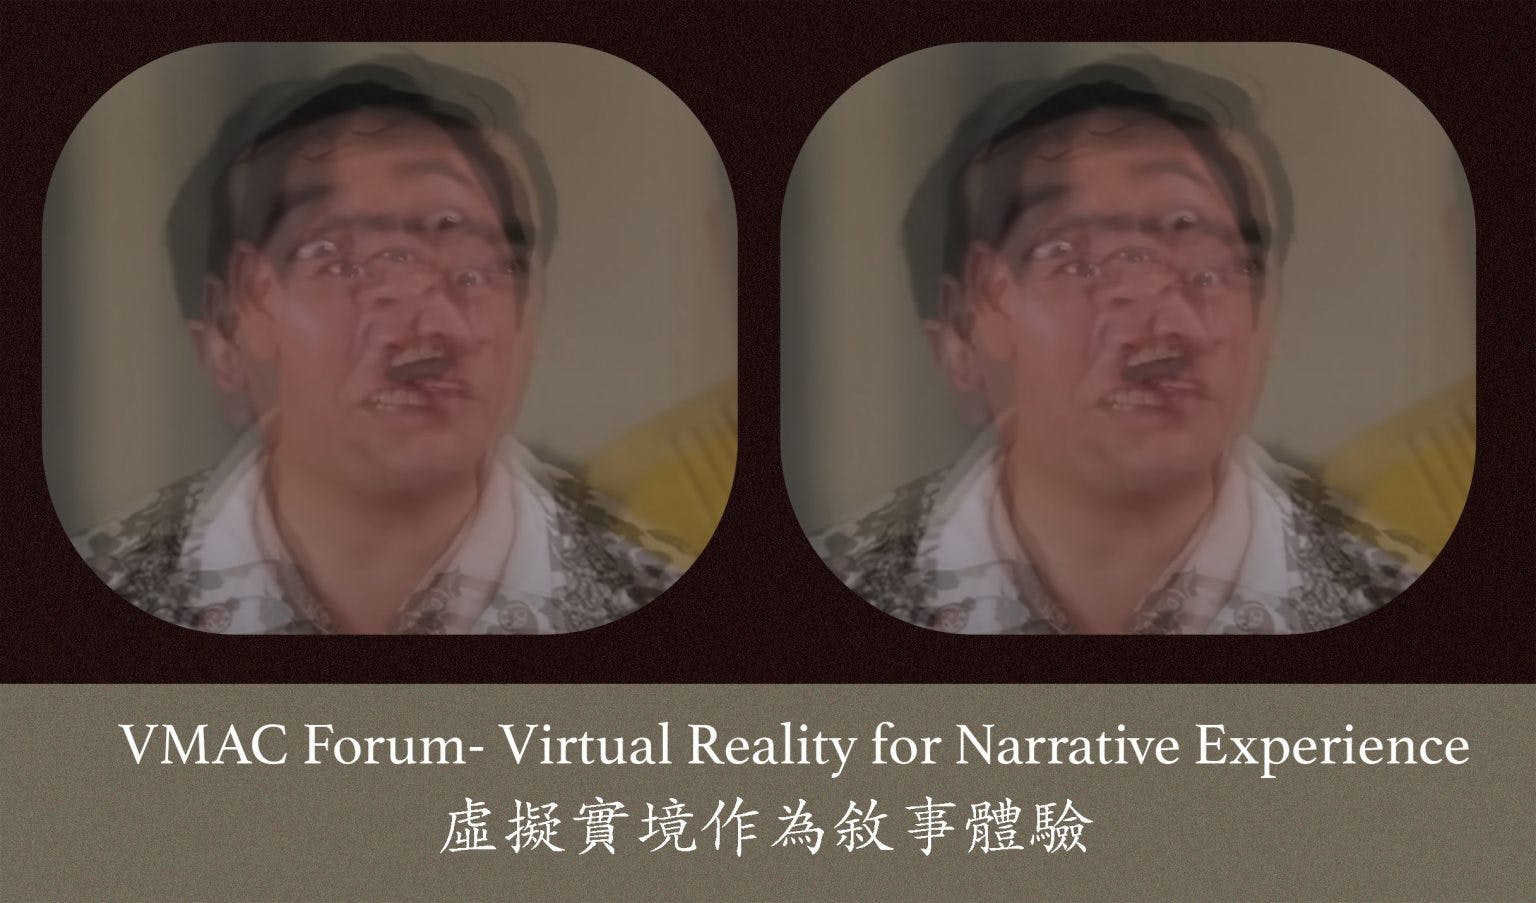 VMAC Forum - Virtual Reality for Narrative Experience VMAC Forum - 虛擬實境作為敘事體驗